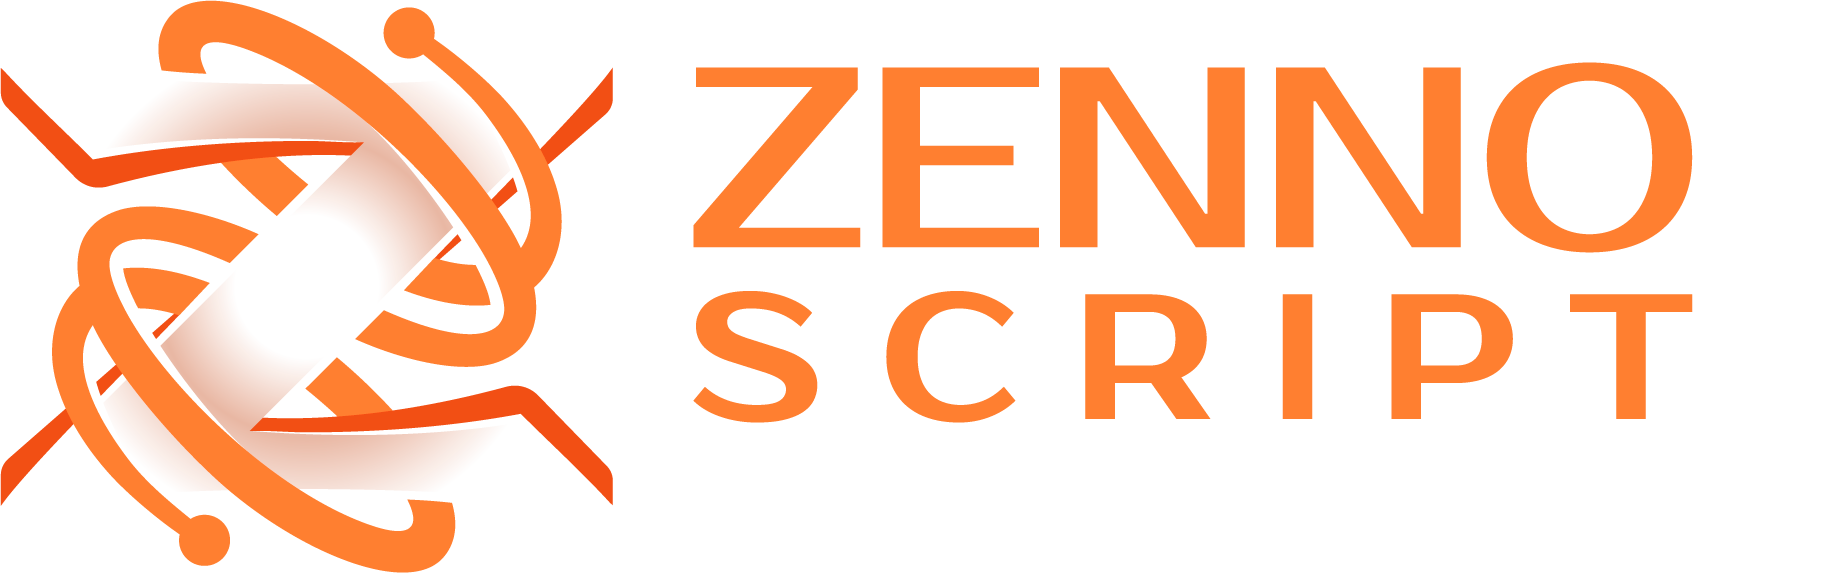 Zennoposter Templates for Sale, Zennoposter Video Tutorials